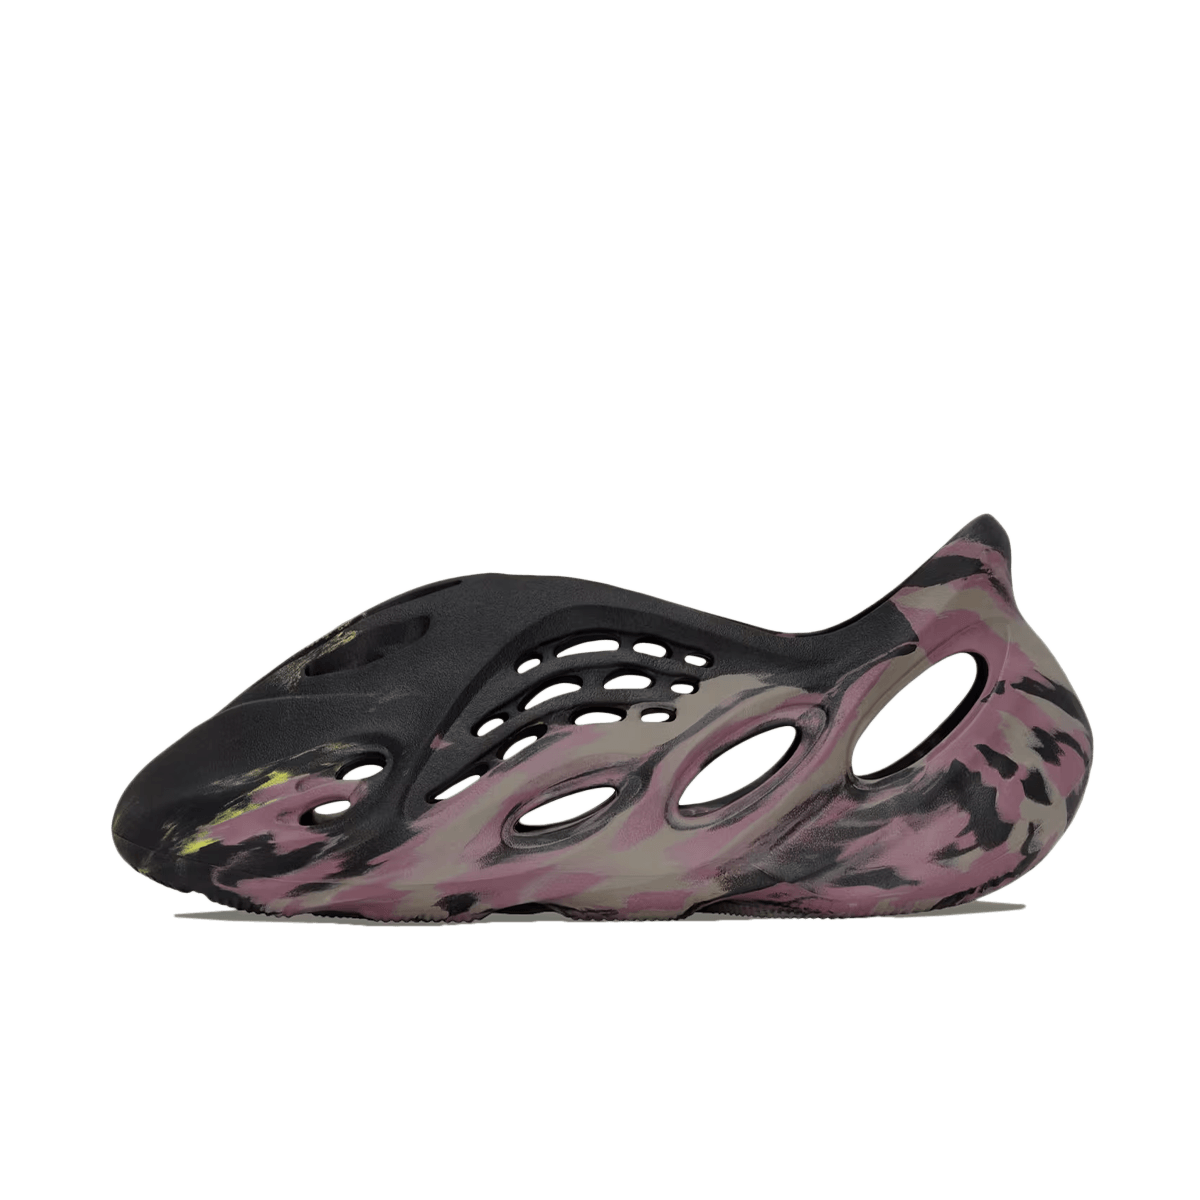 adidas Yeezy Foam Runner 'MX Carbon' IG9562